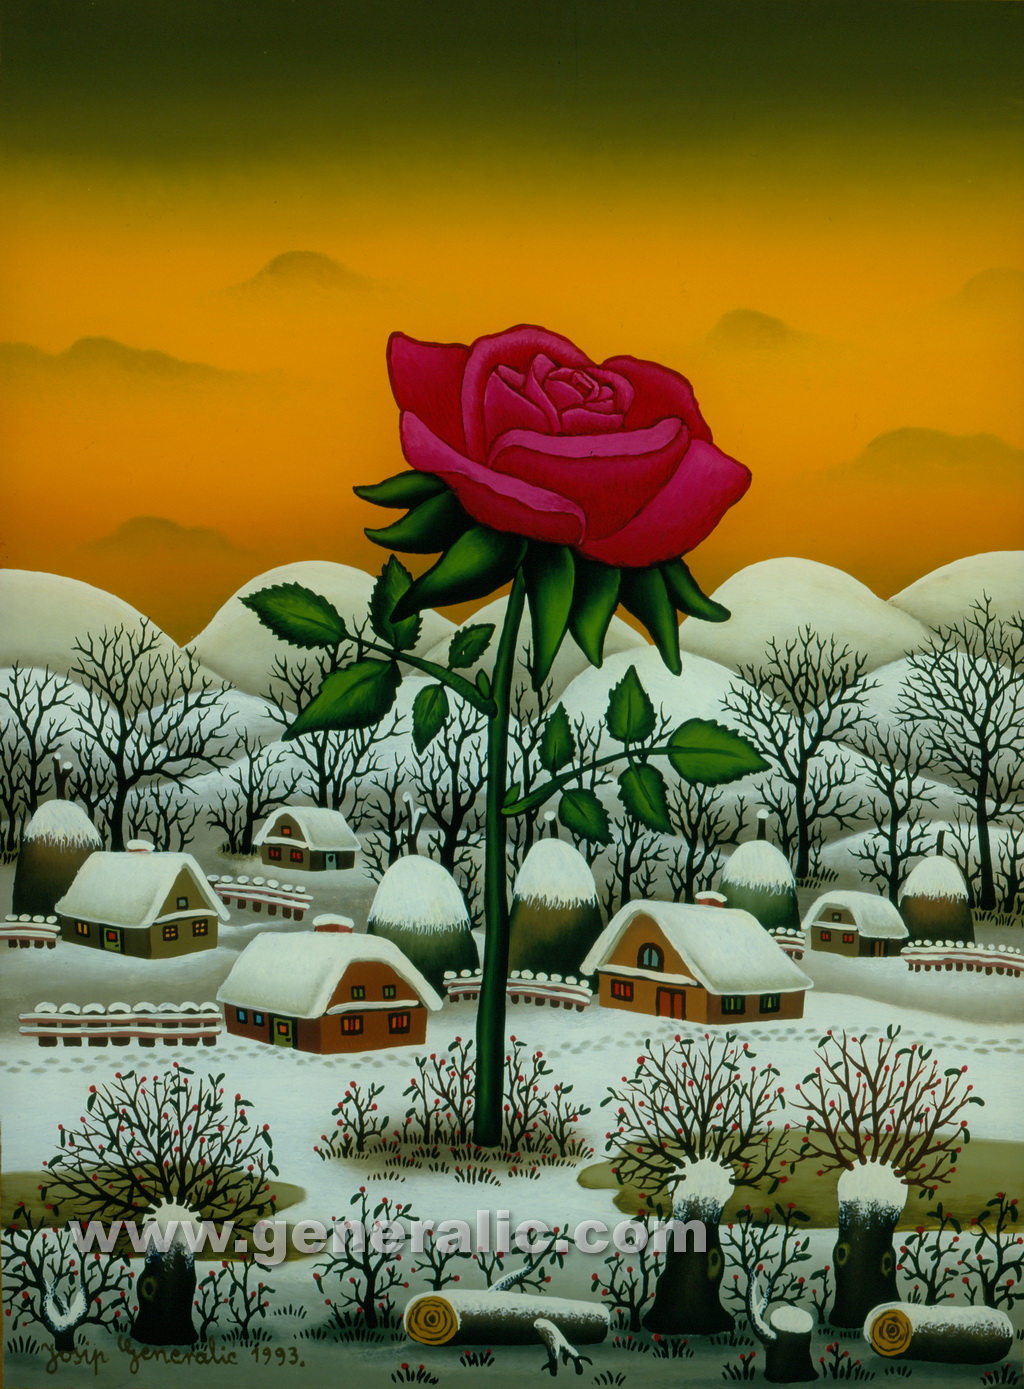 Josip Generalic, 1993, The rose, oil on glass